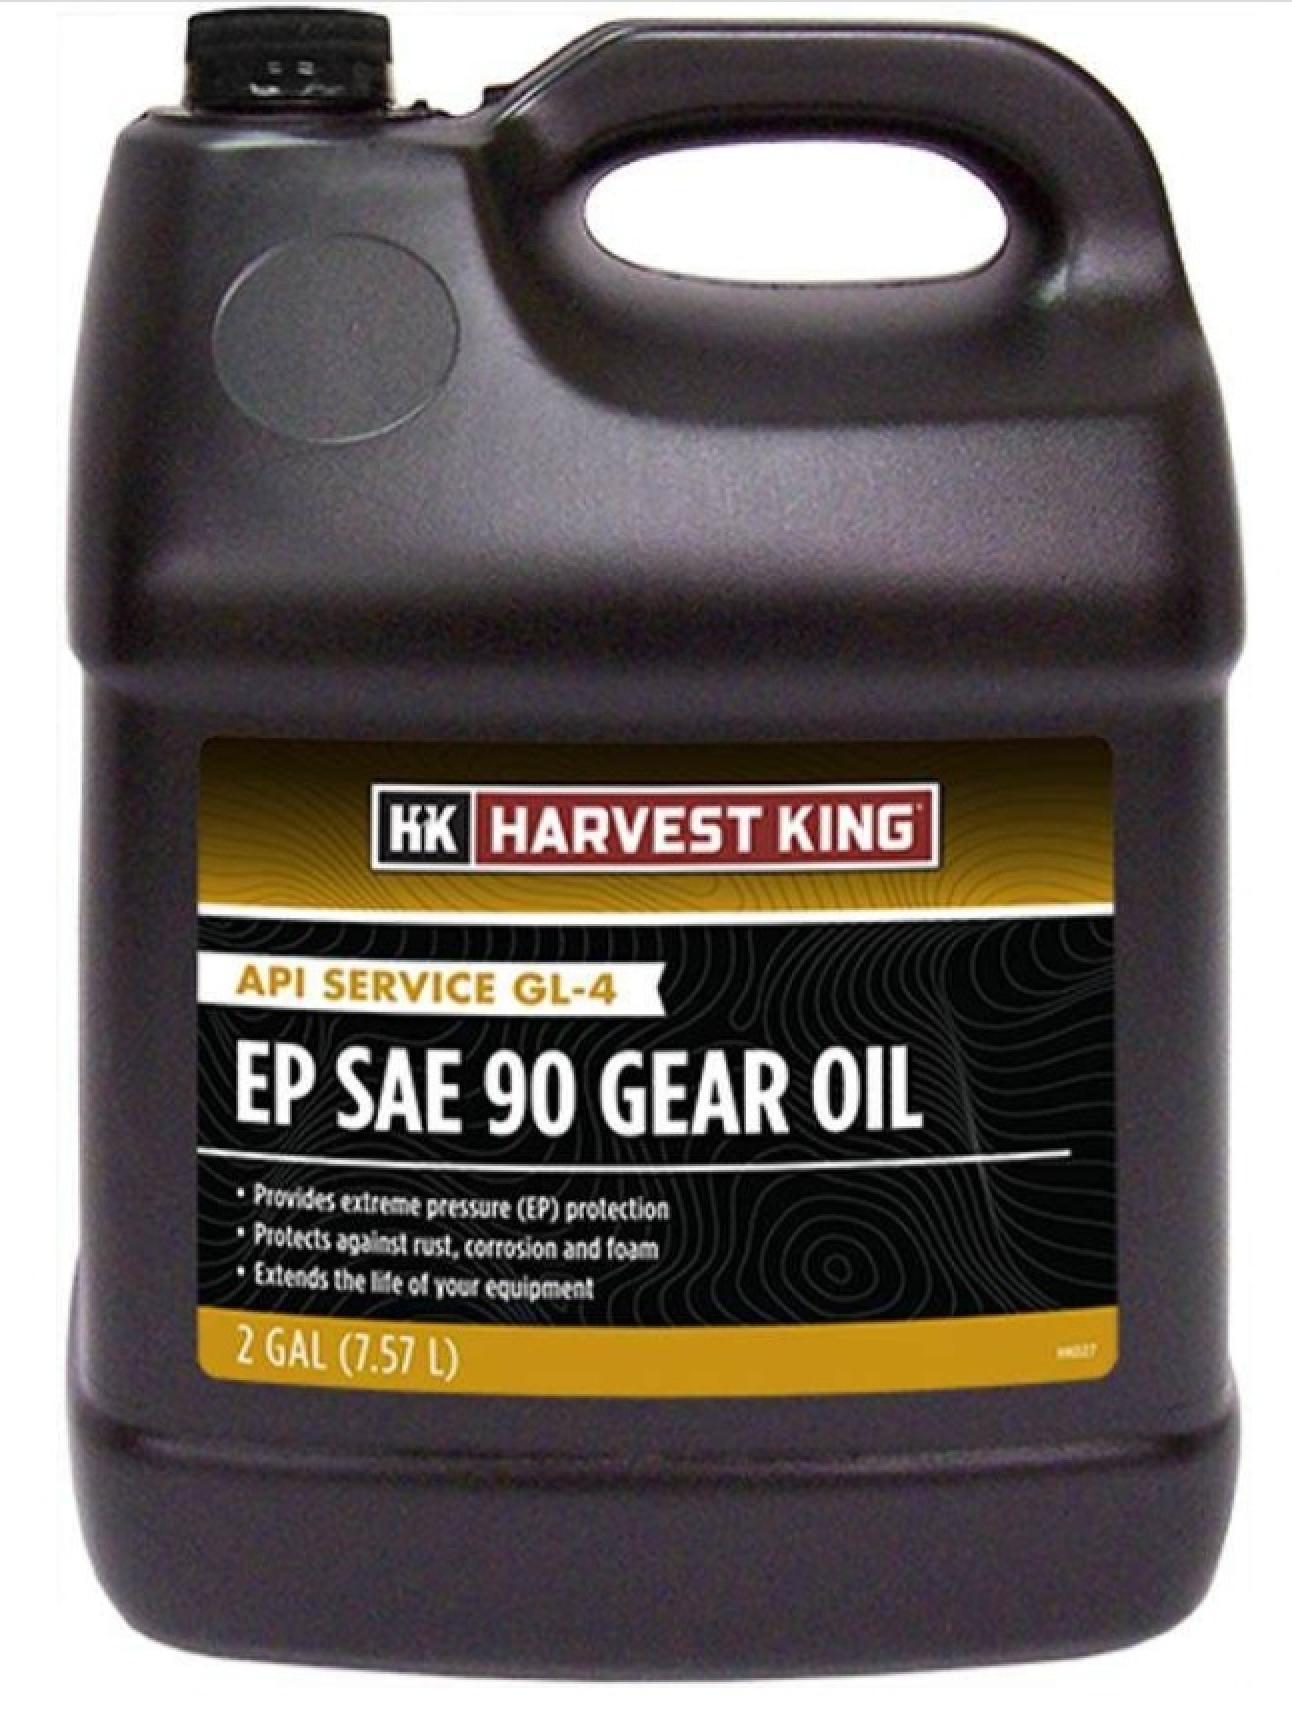 Harvest King API Service GL-4 SAE 90 Gear Oil